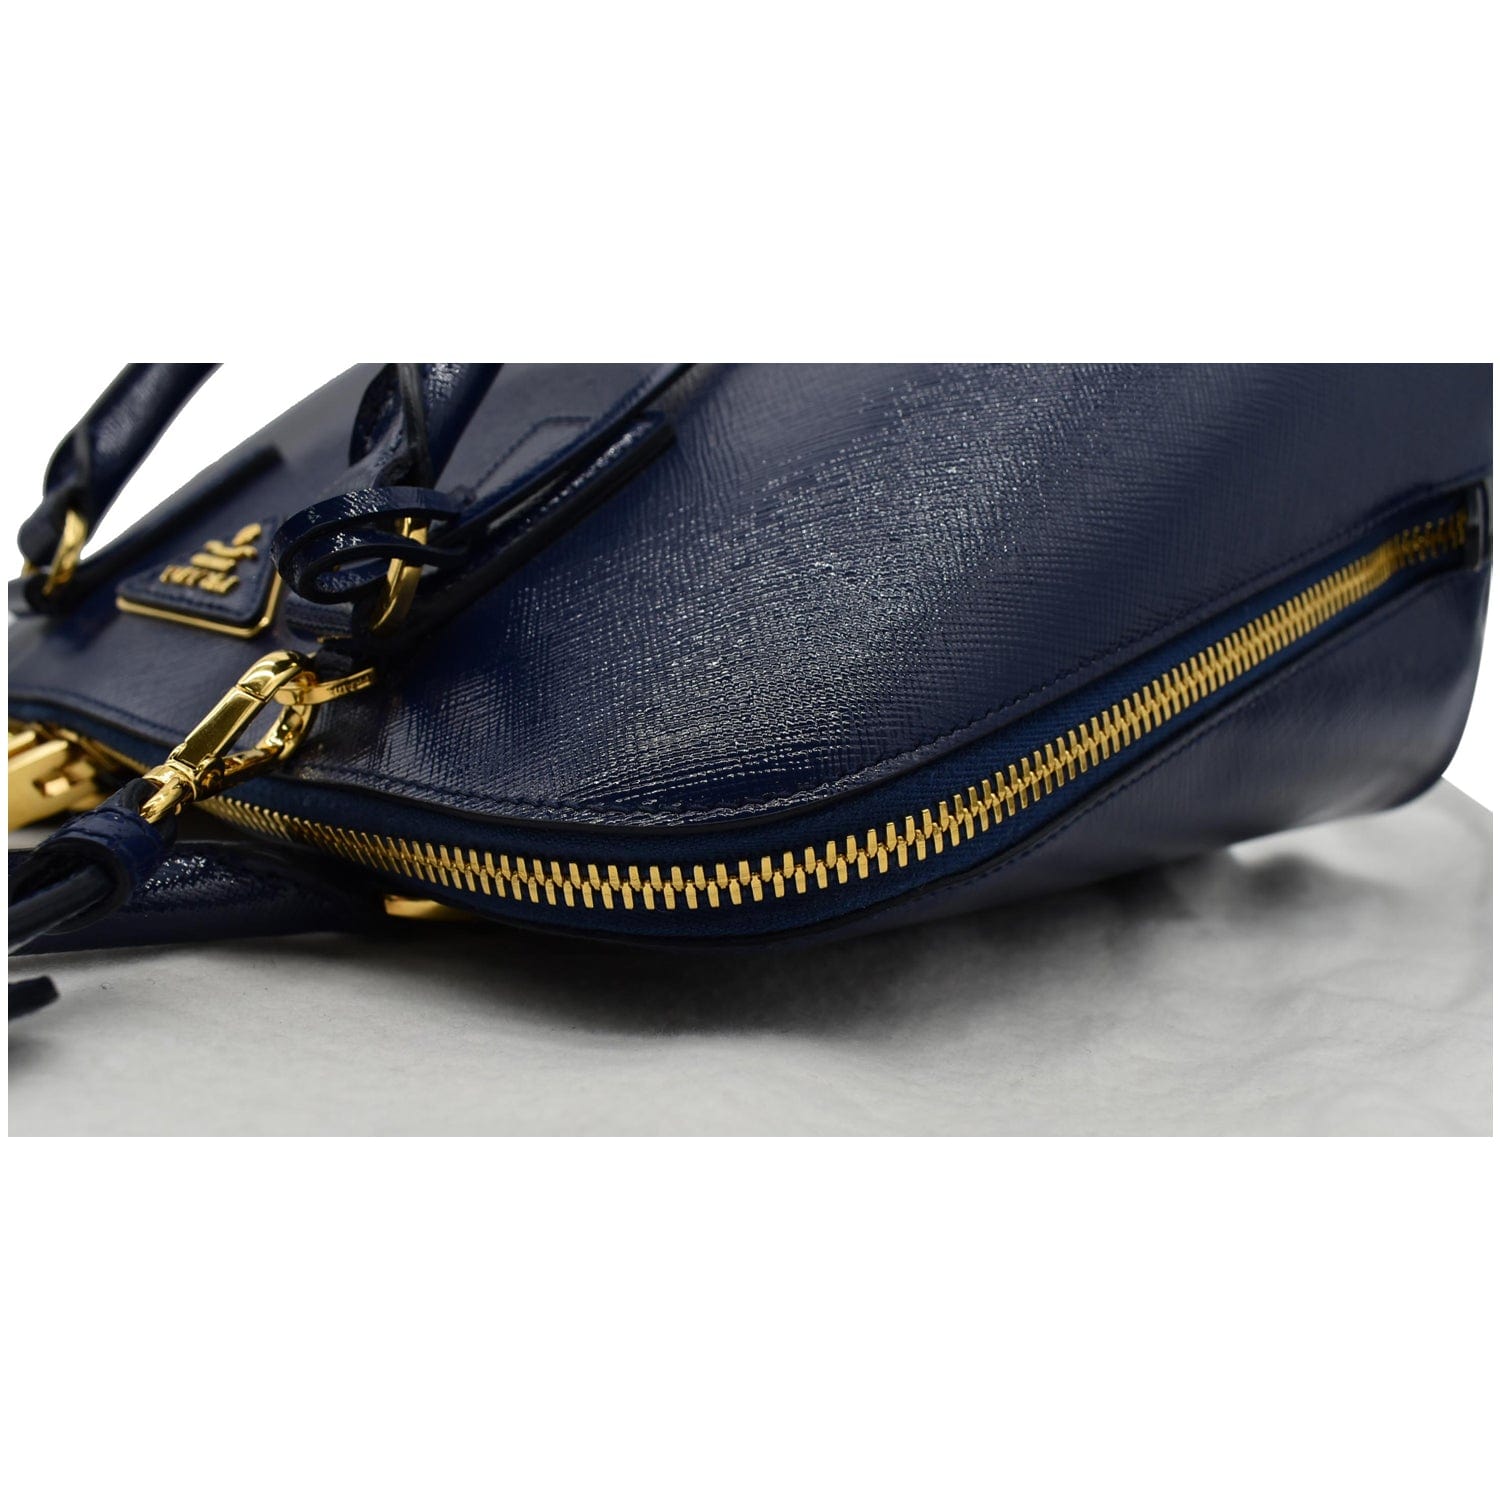 Prada Saffiano Vernice Black Leather Crossbody Bag